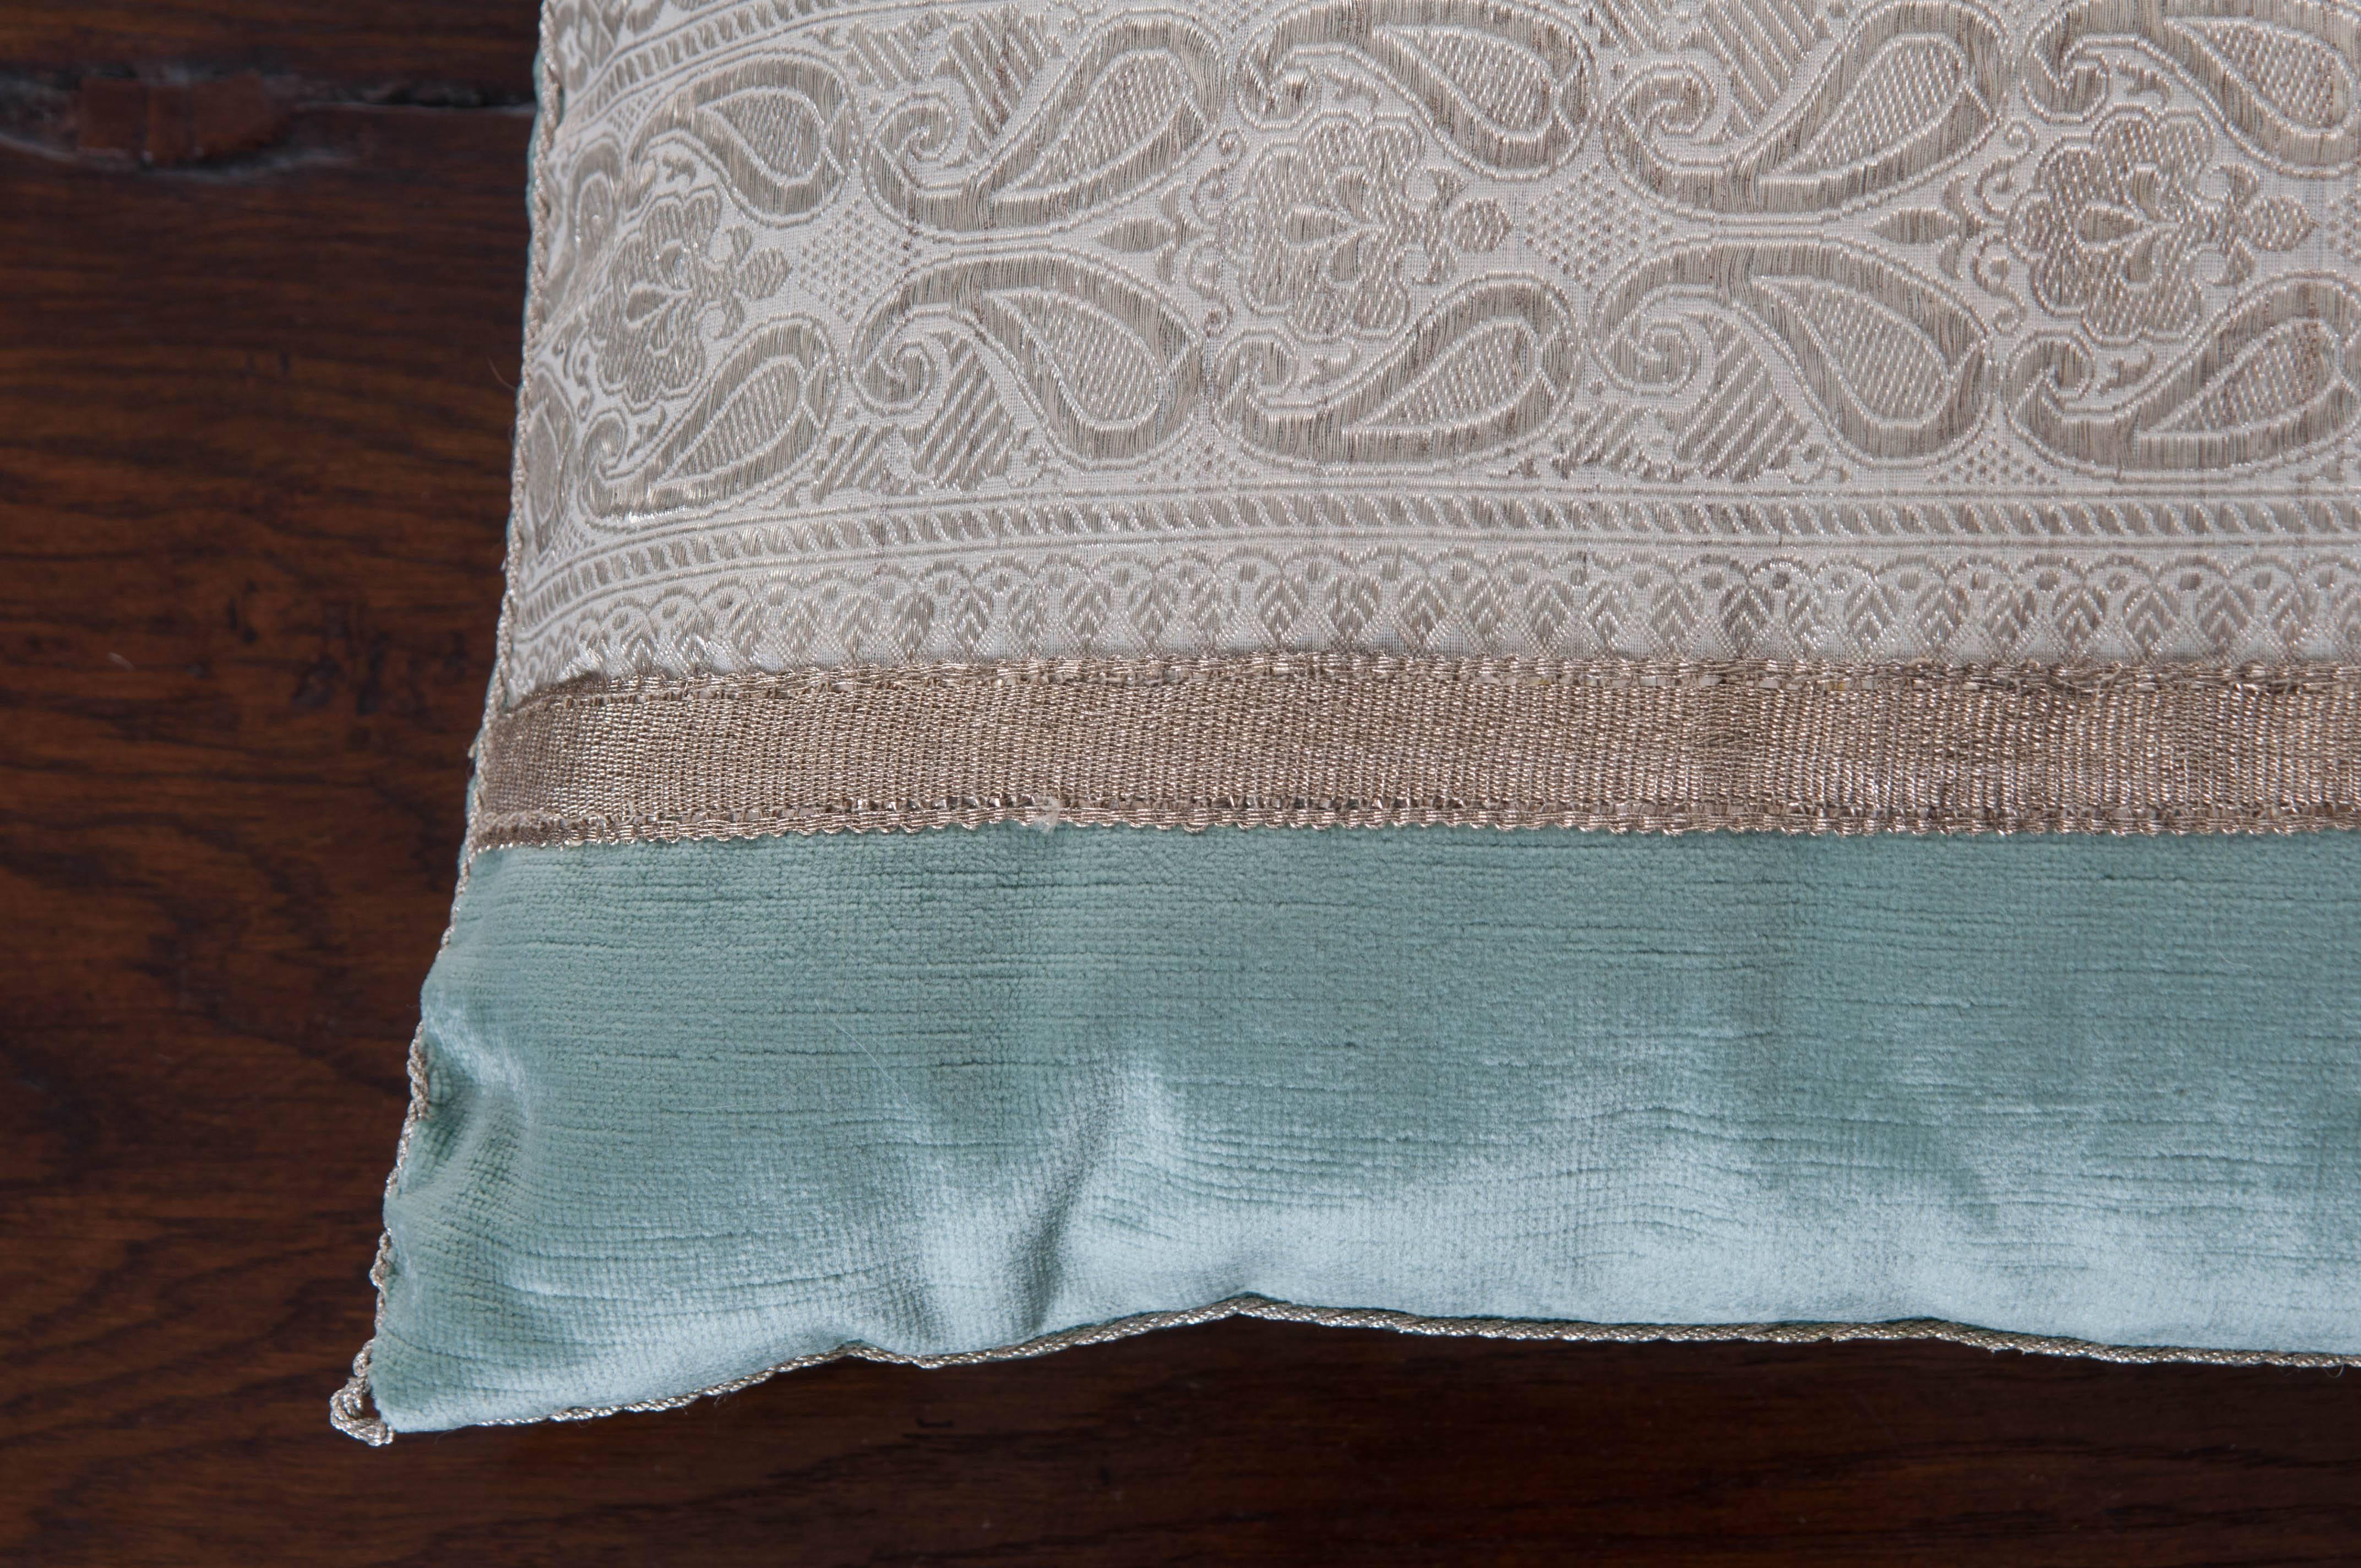 Indian Pair of Antique Textile Pillows by B.Viz Designs